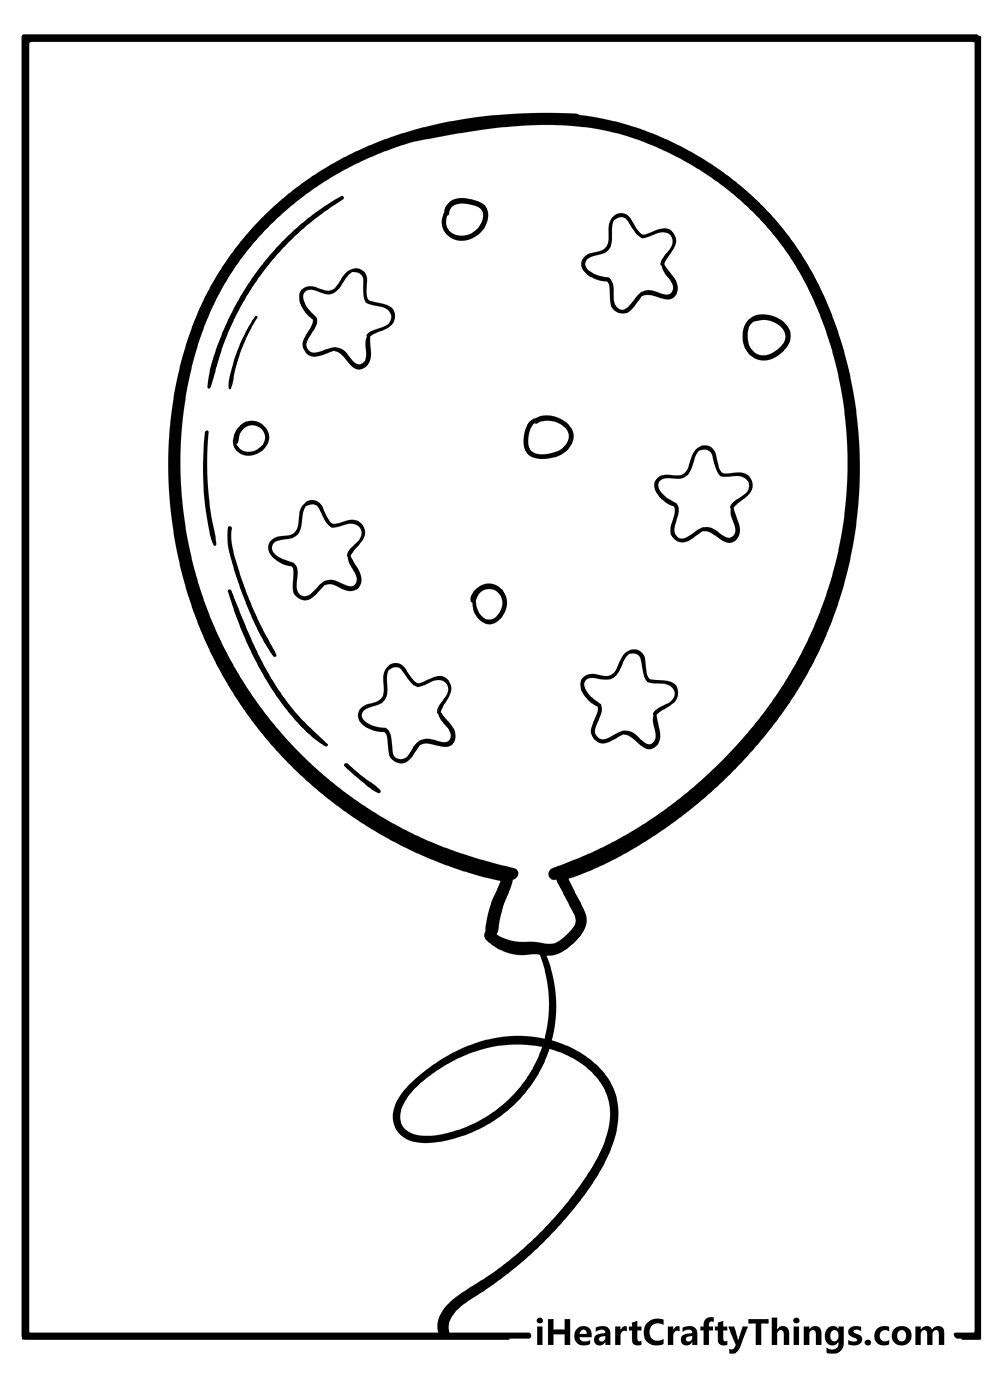 Free Printable Balloons Template